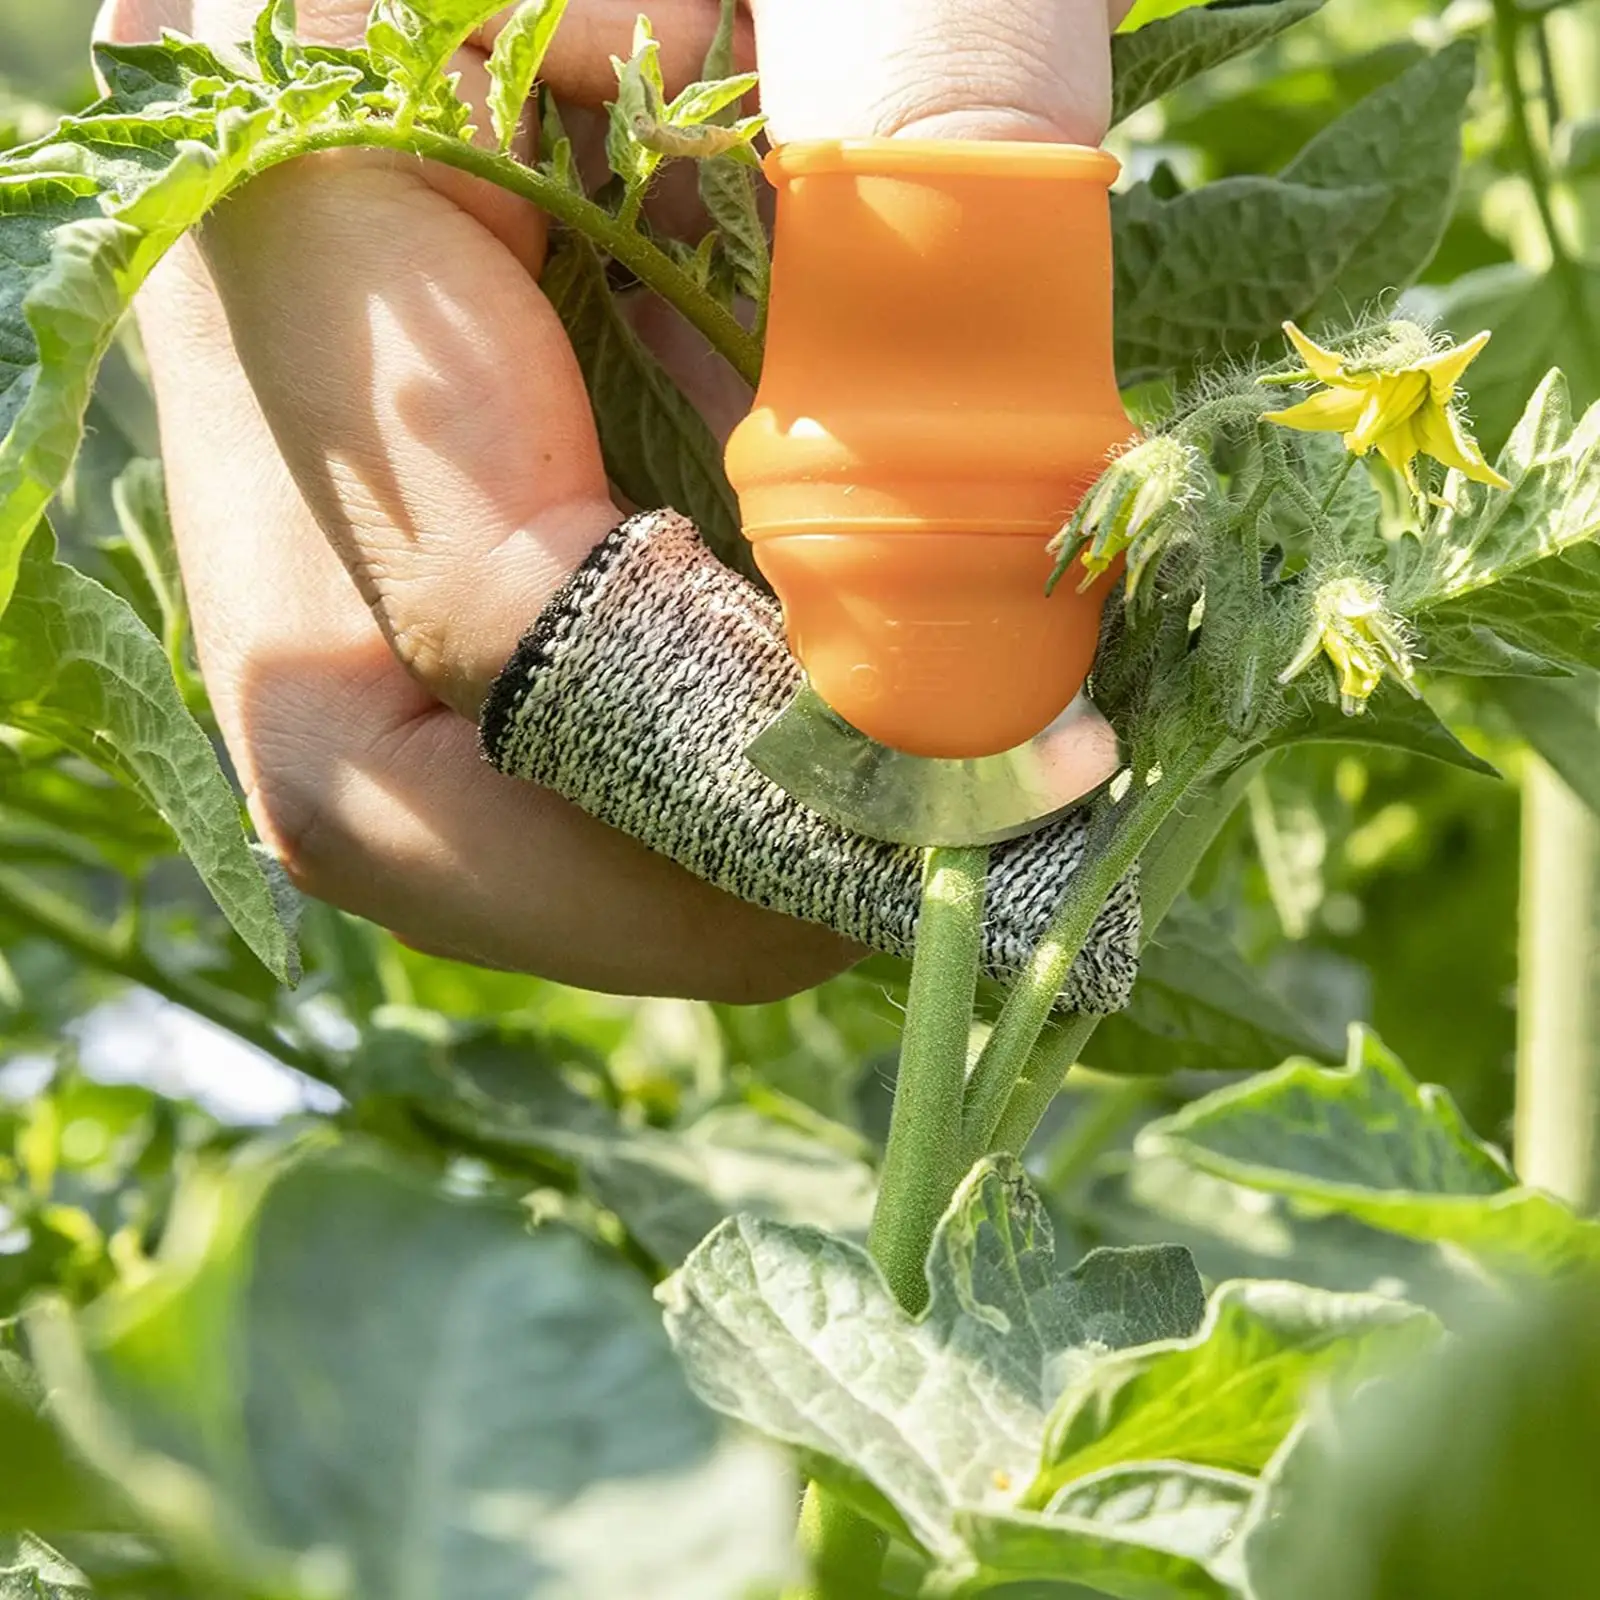 

12Pcs Gardening Silicone Thumb Knives Set Anti-cutting Finger Sleeves Harvesting Tool for Twig Pruning Fruit Vegetable Picking